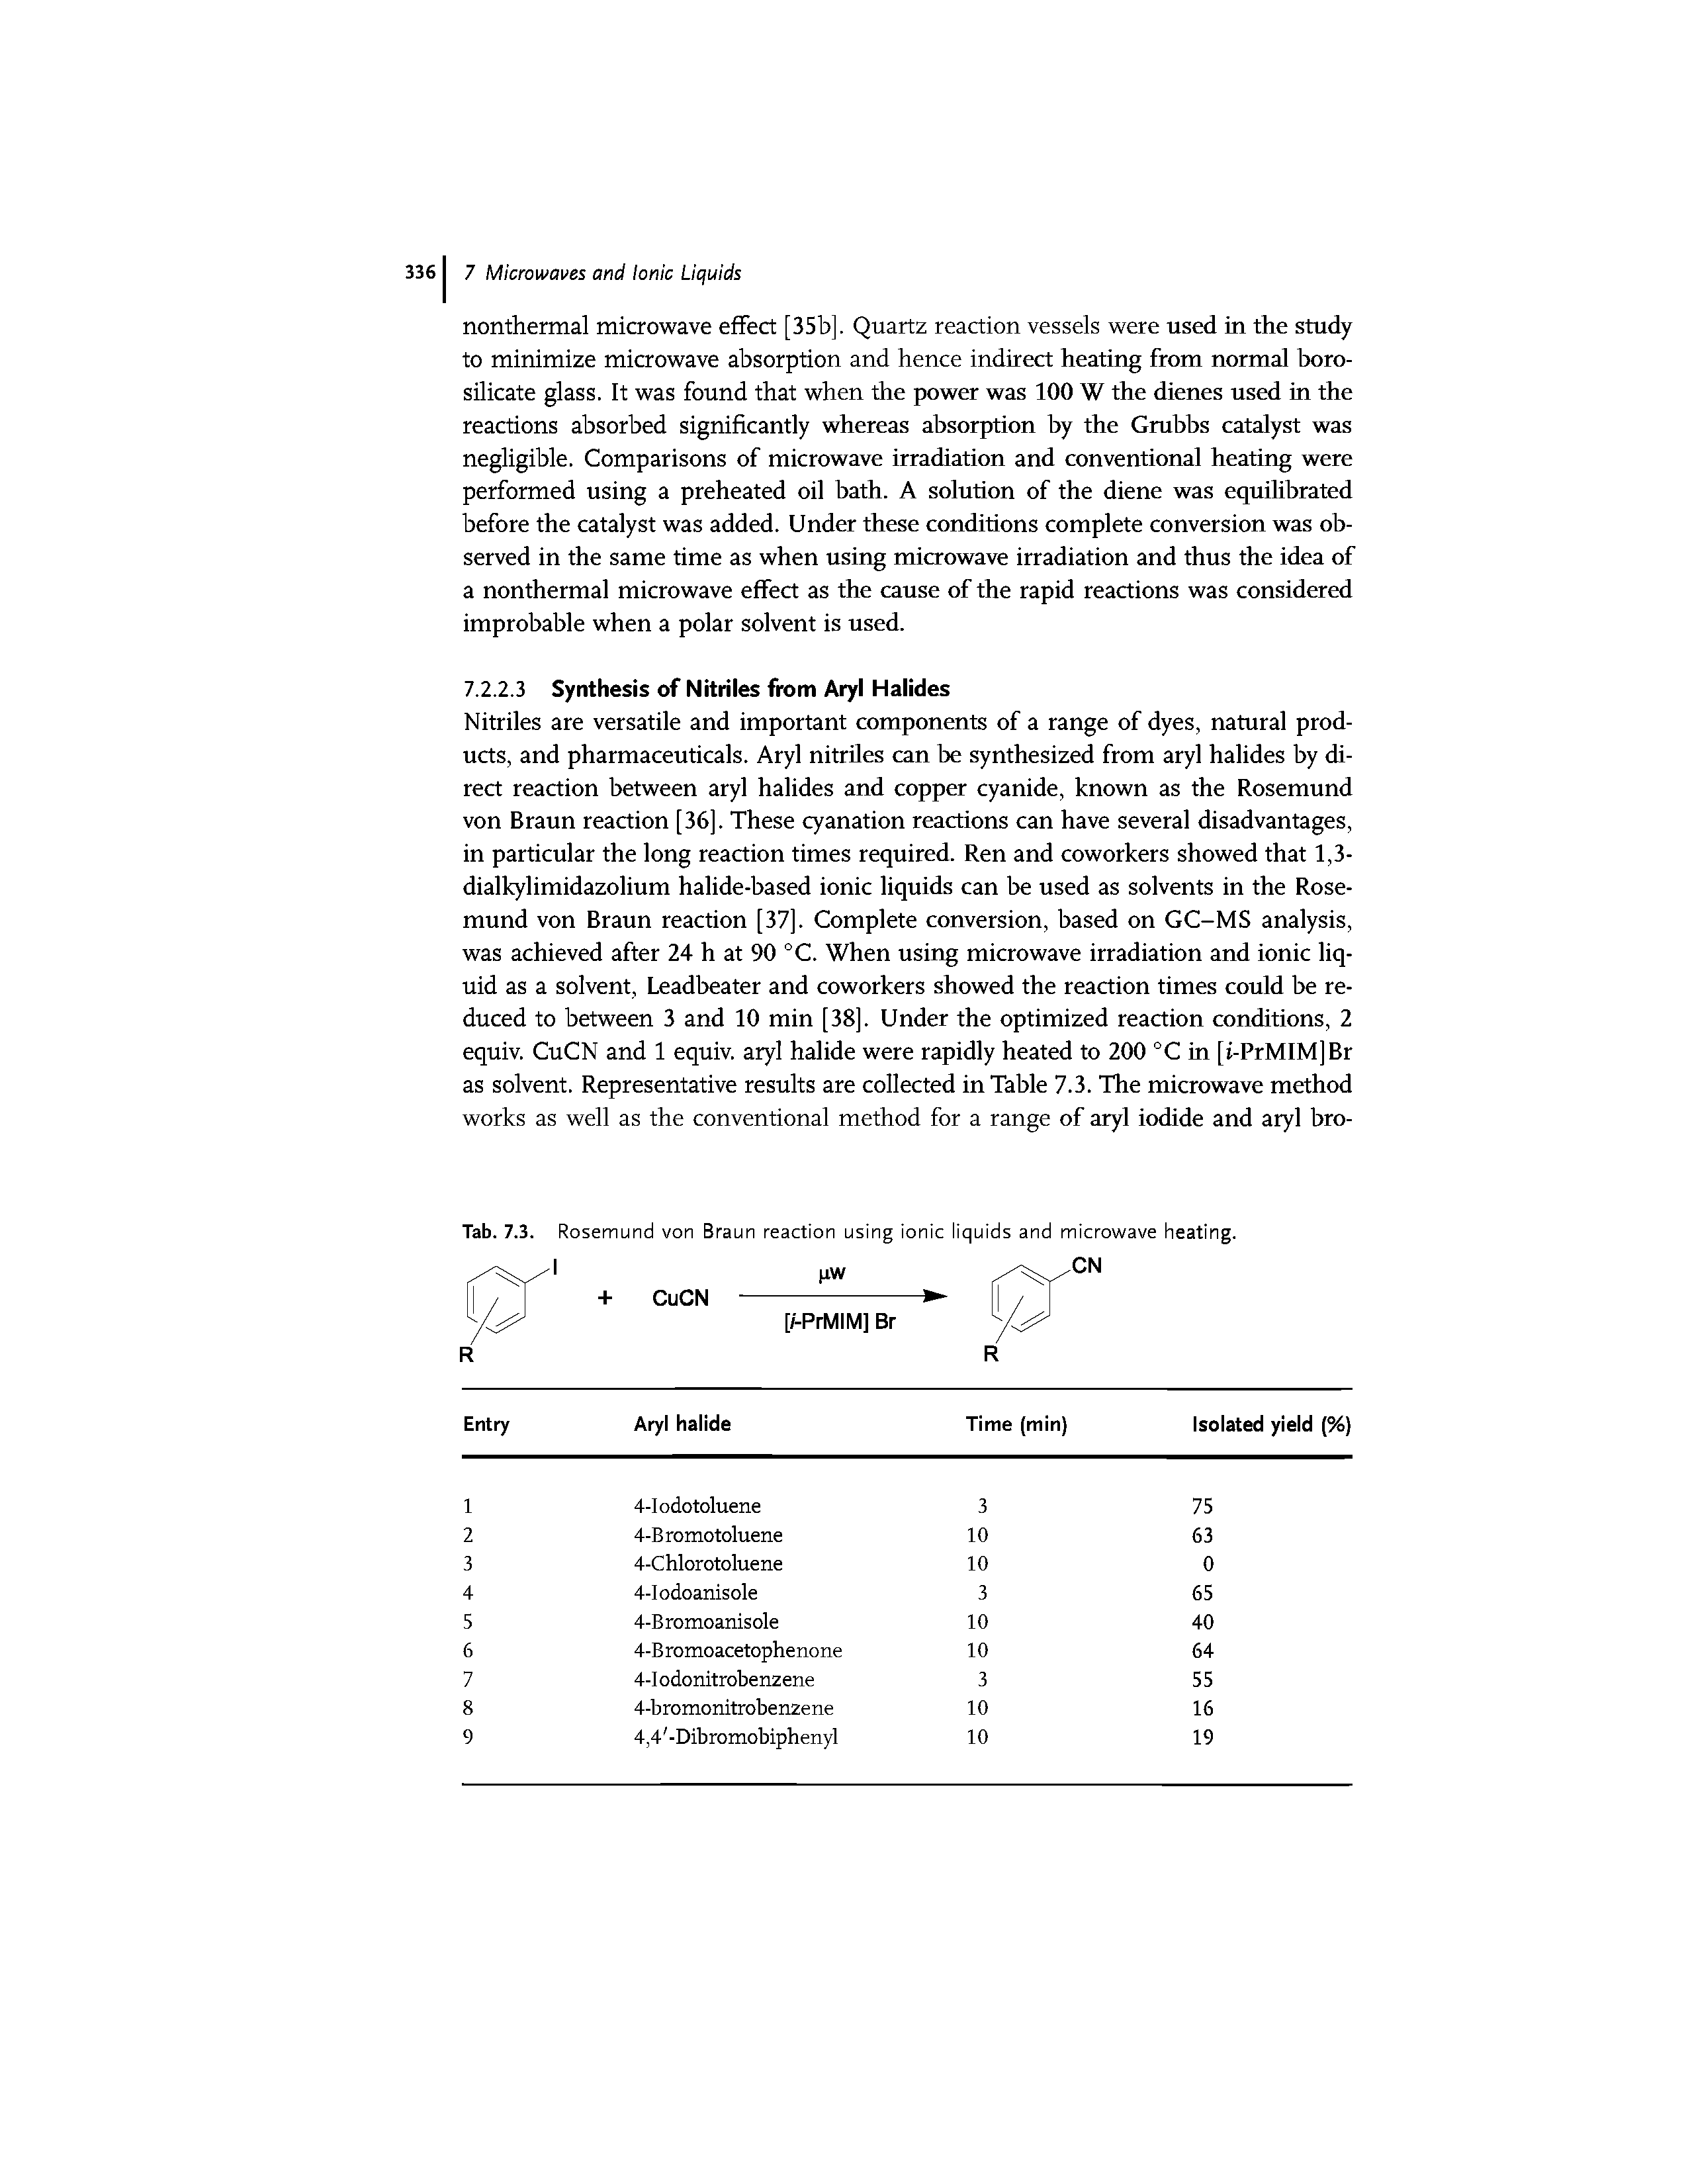 Tab. 7.3. Rosemund von Braun reaction using ionic liquids and microwave heating.